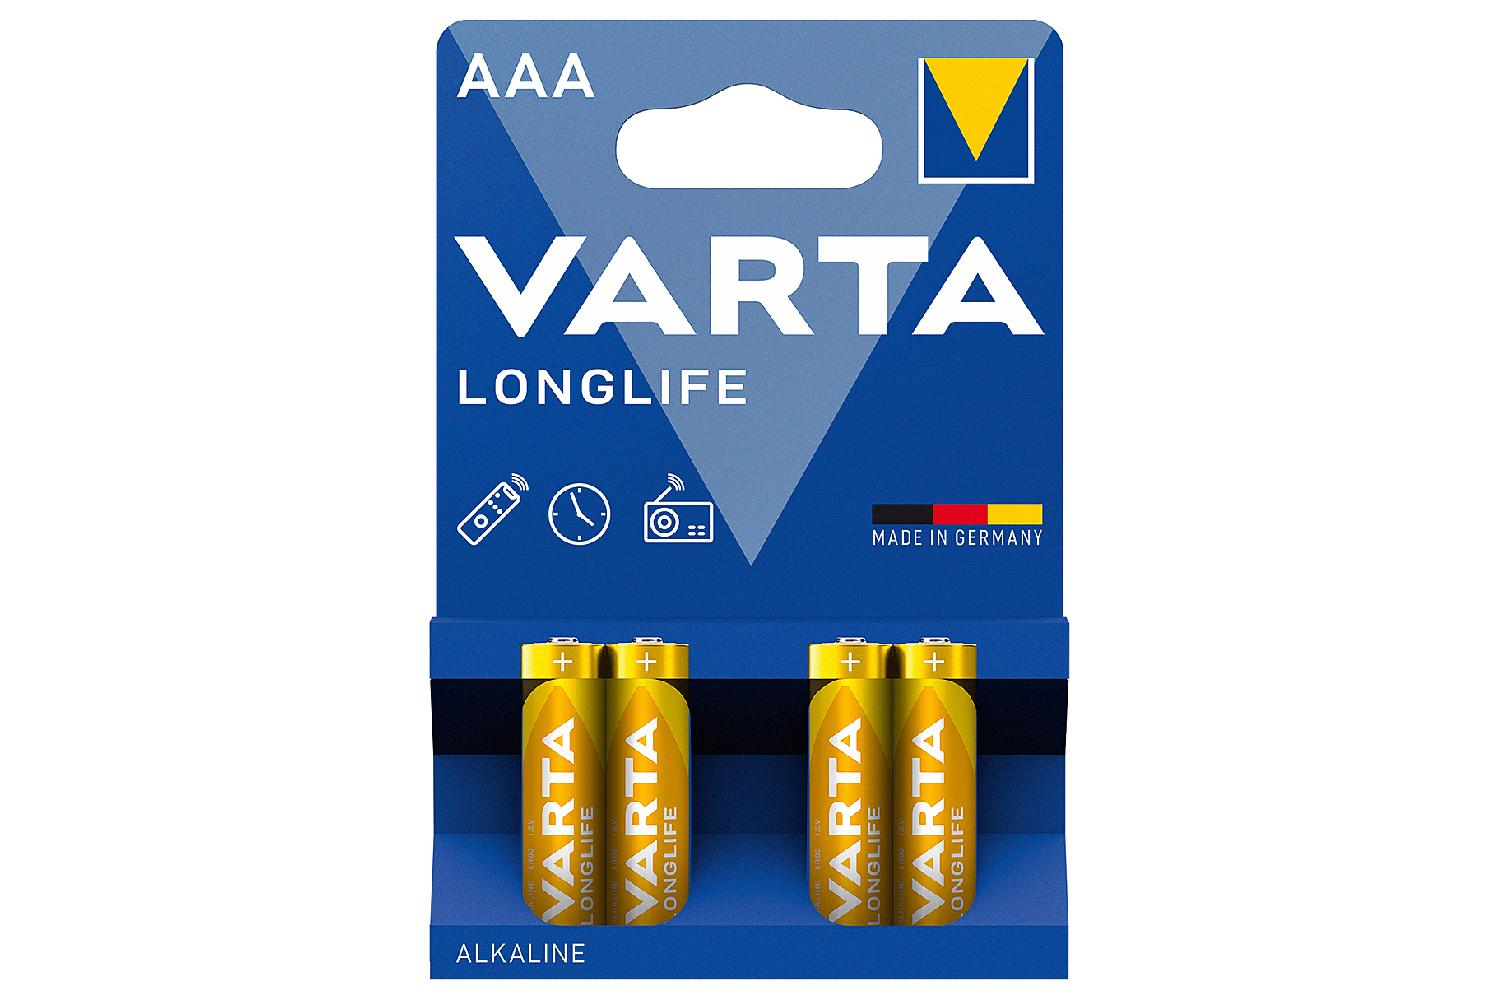 VARTA Batterie Longlife AAA  Stück VARTA LONGLIFE Power ist die kraftvollste Batterie 